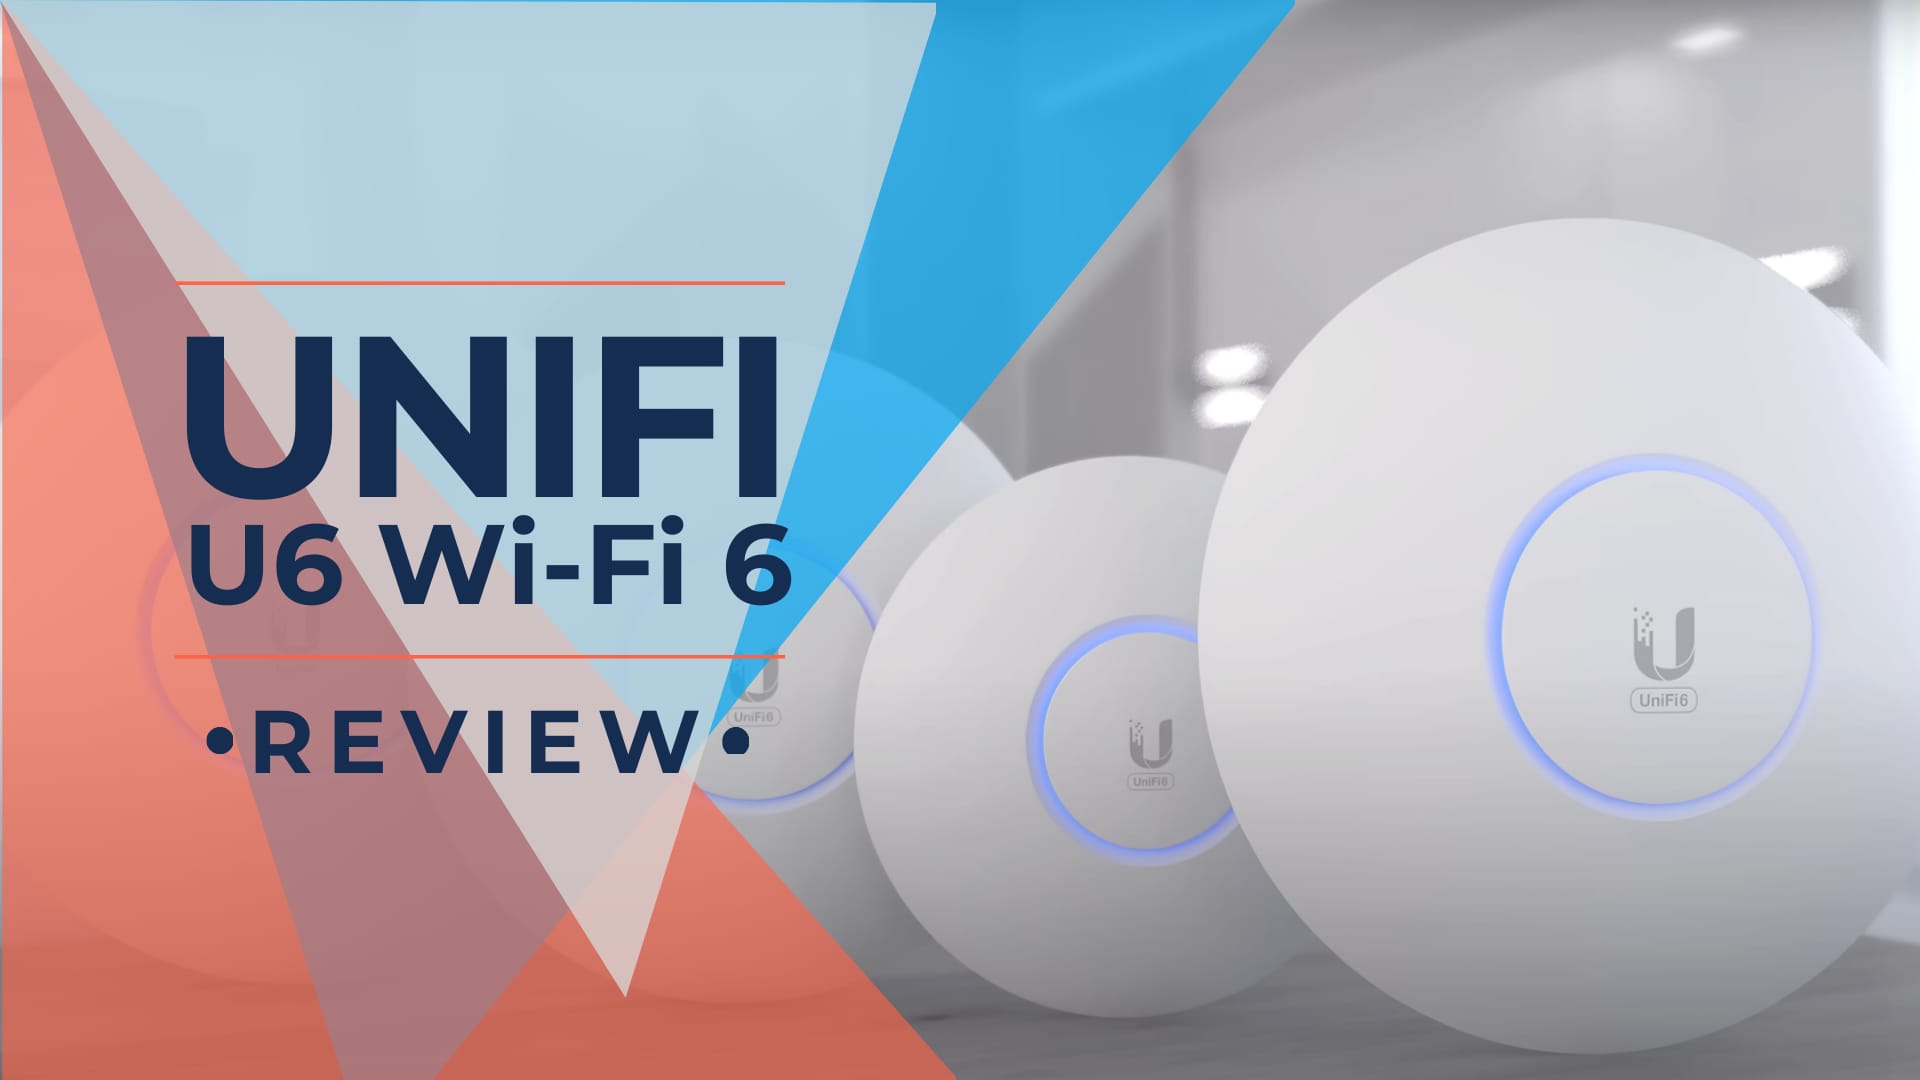 Ubiquiti UniFi Dream Machine Special Edition - network management device